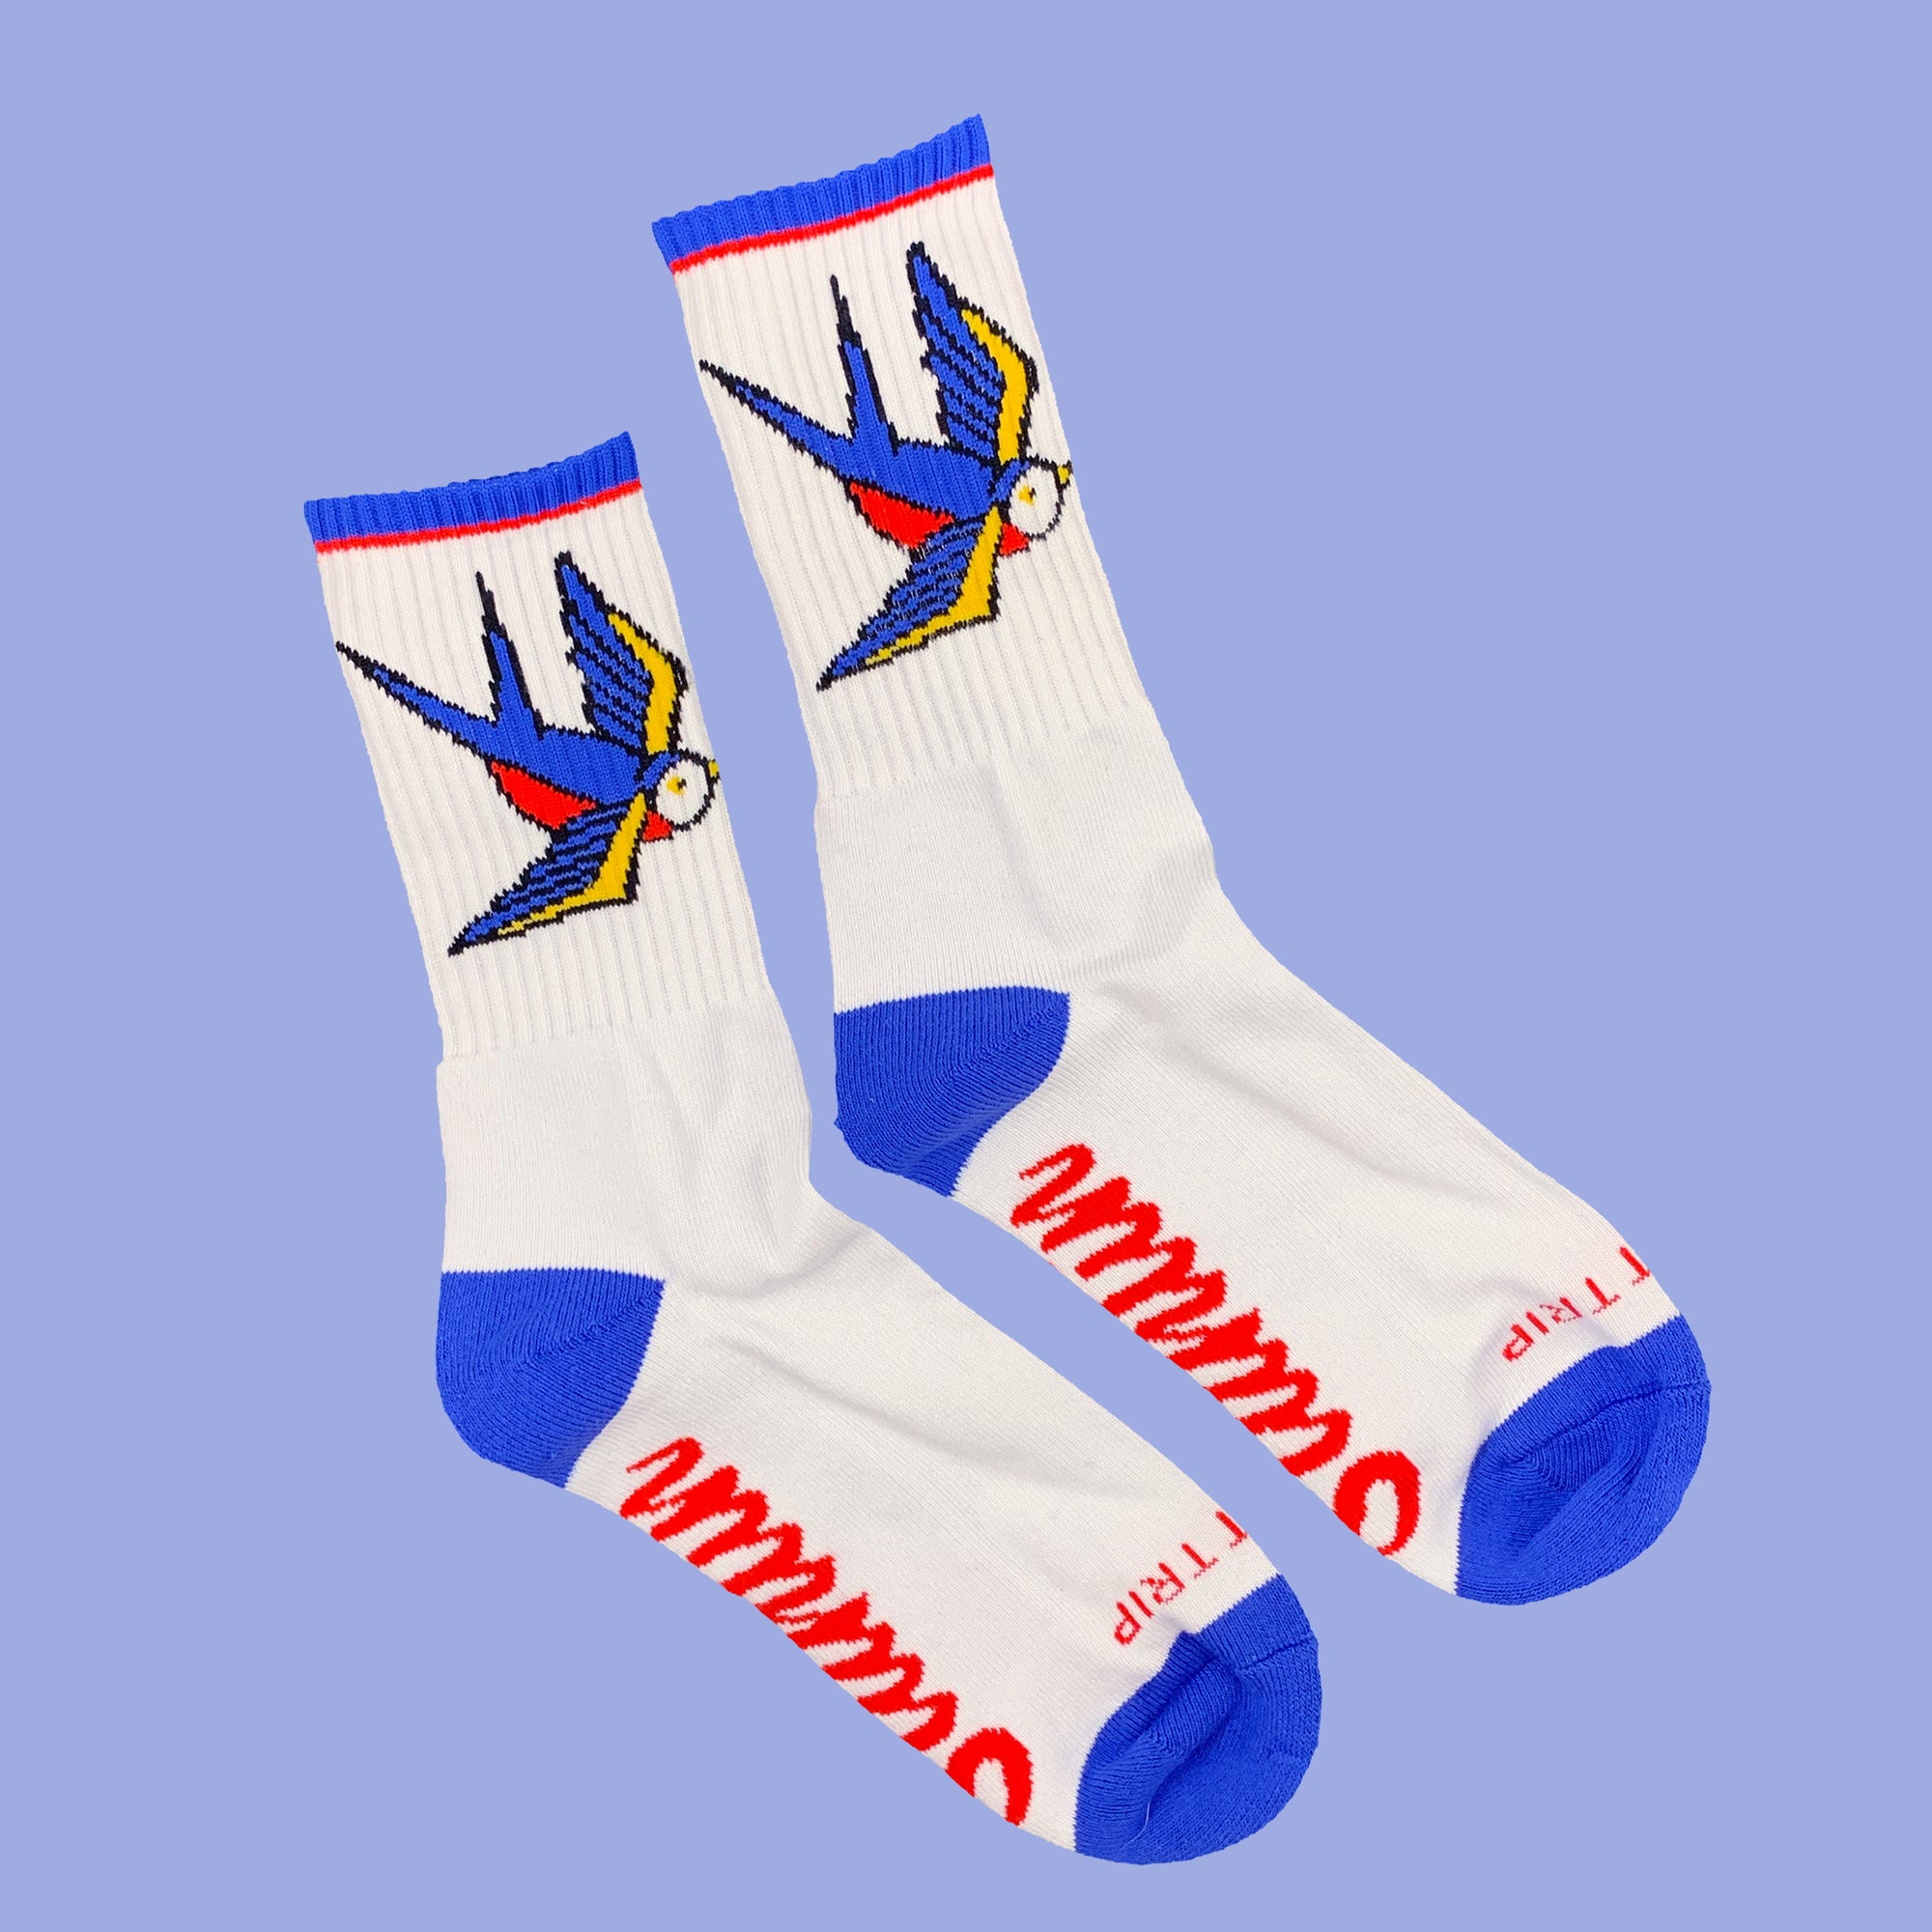 Swallows Socks